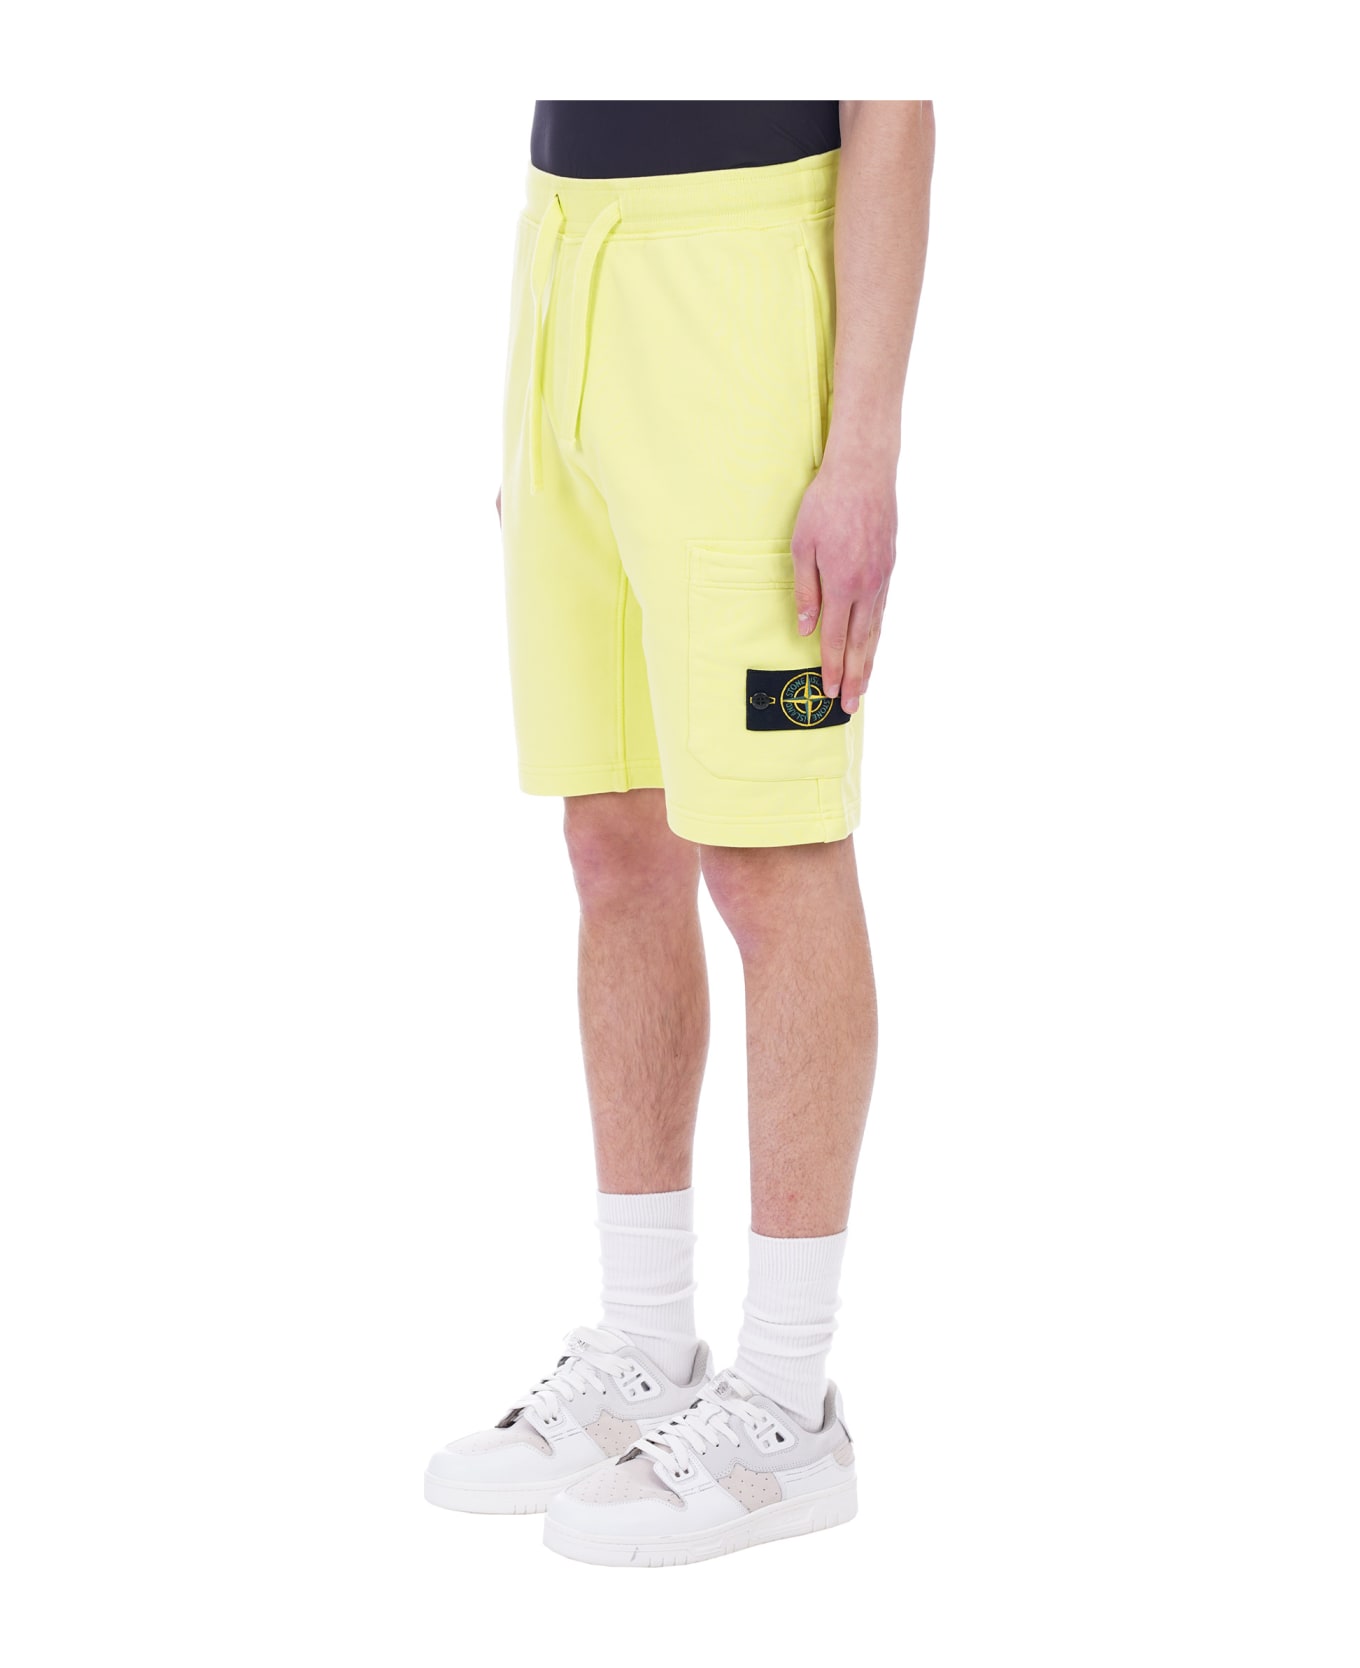 Stone Island Shorts In Yellow Cotton - yellow